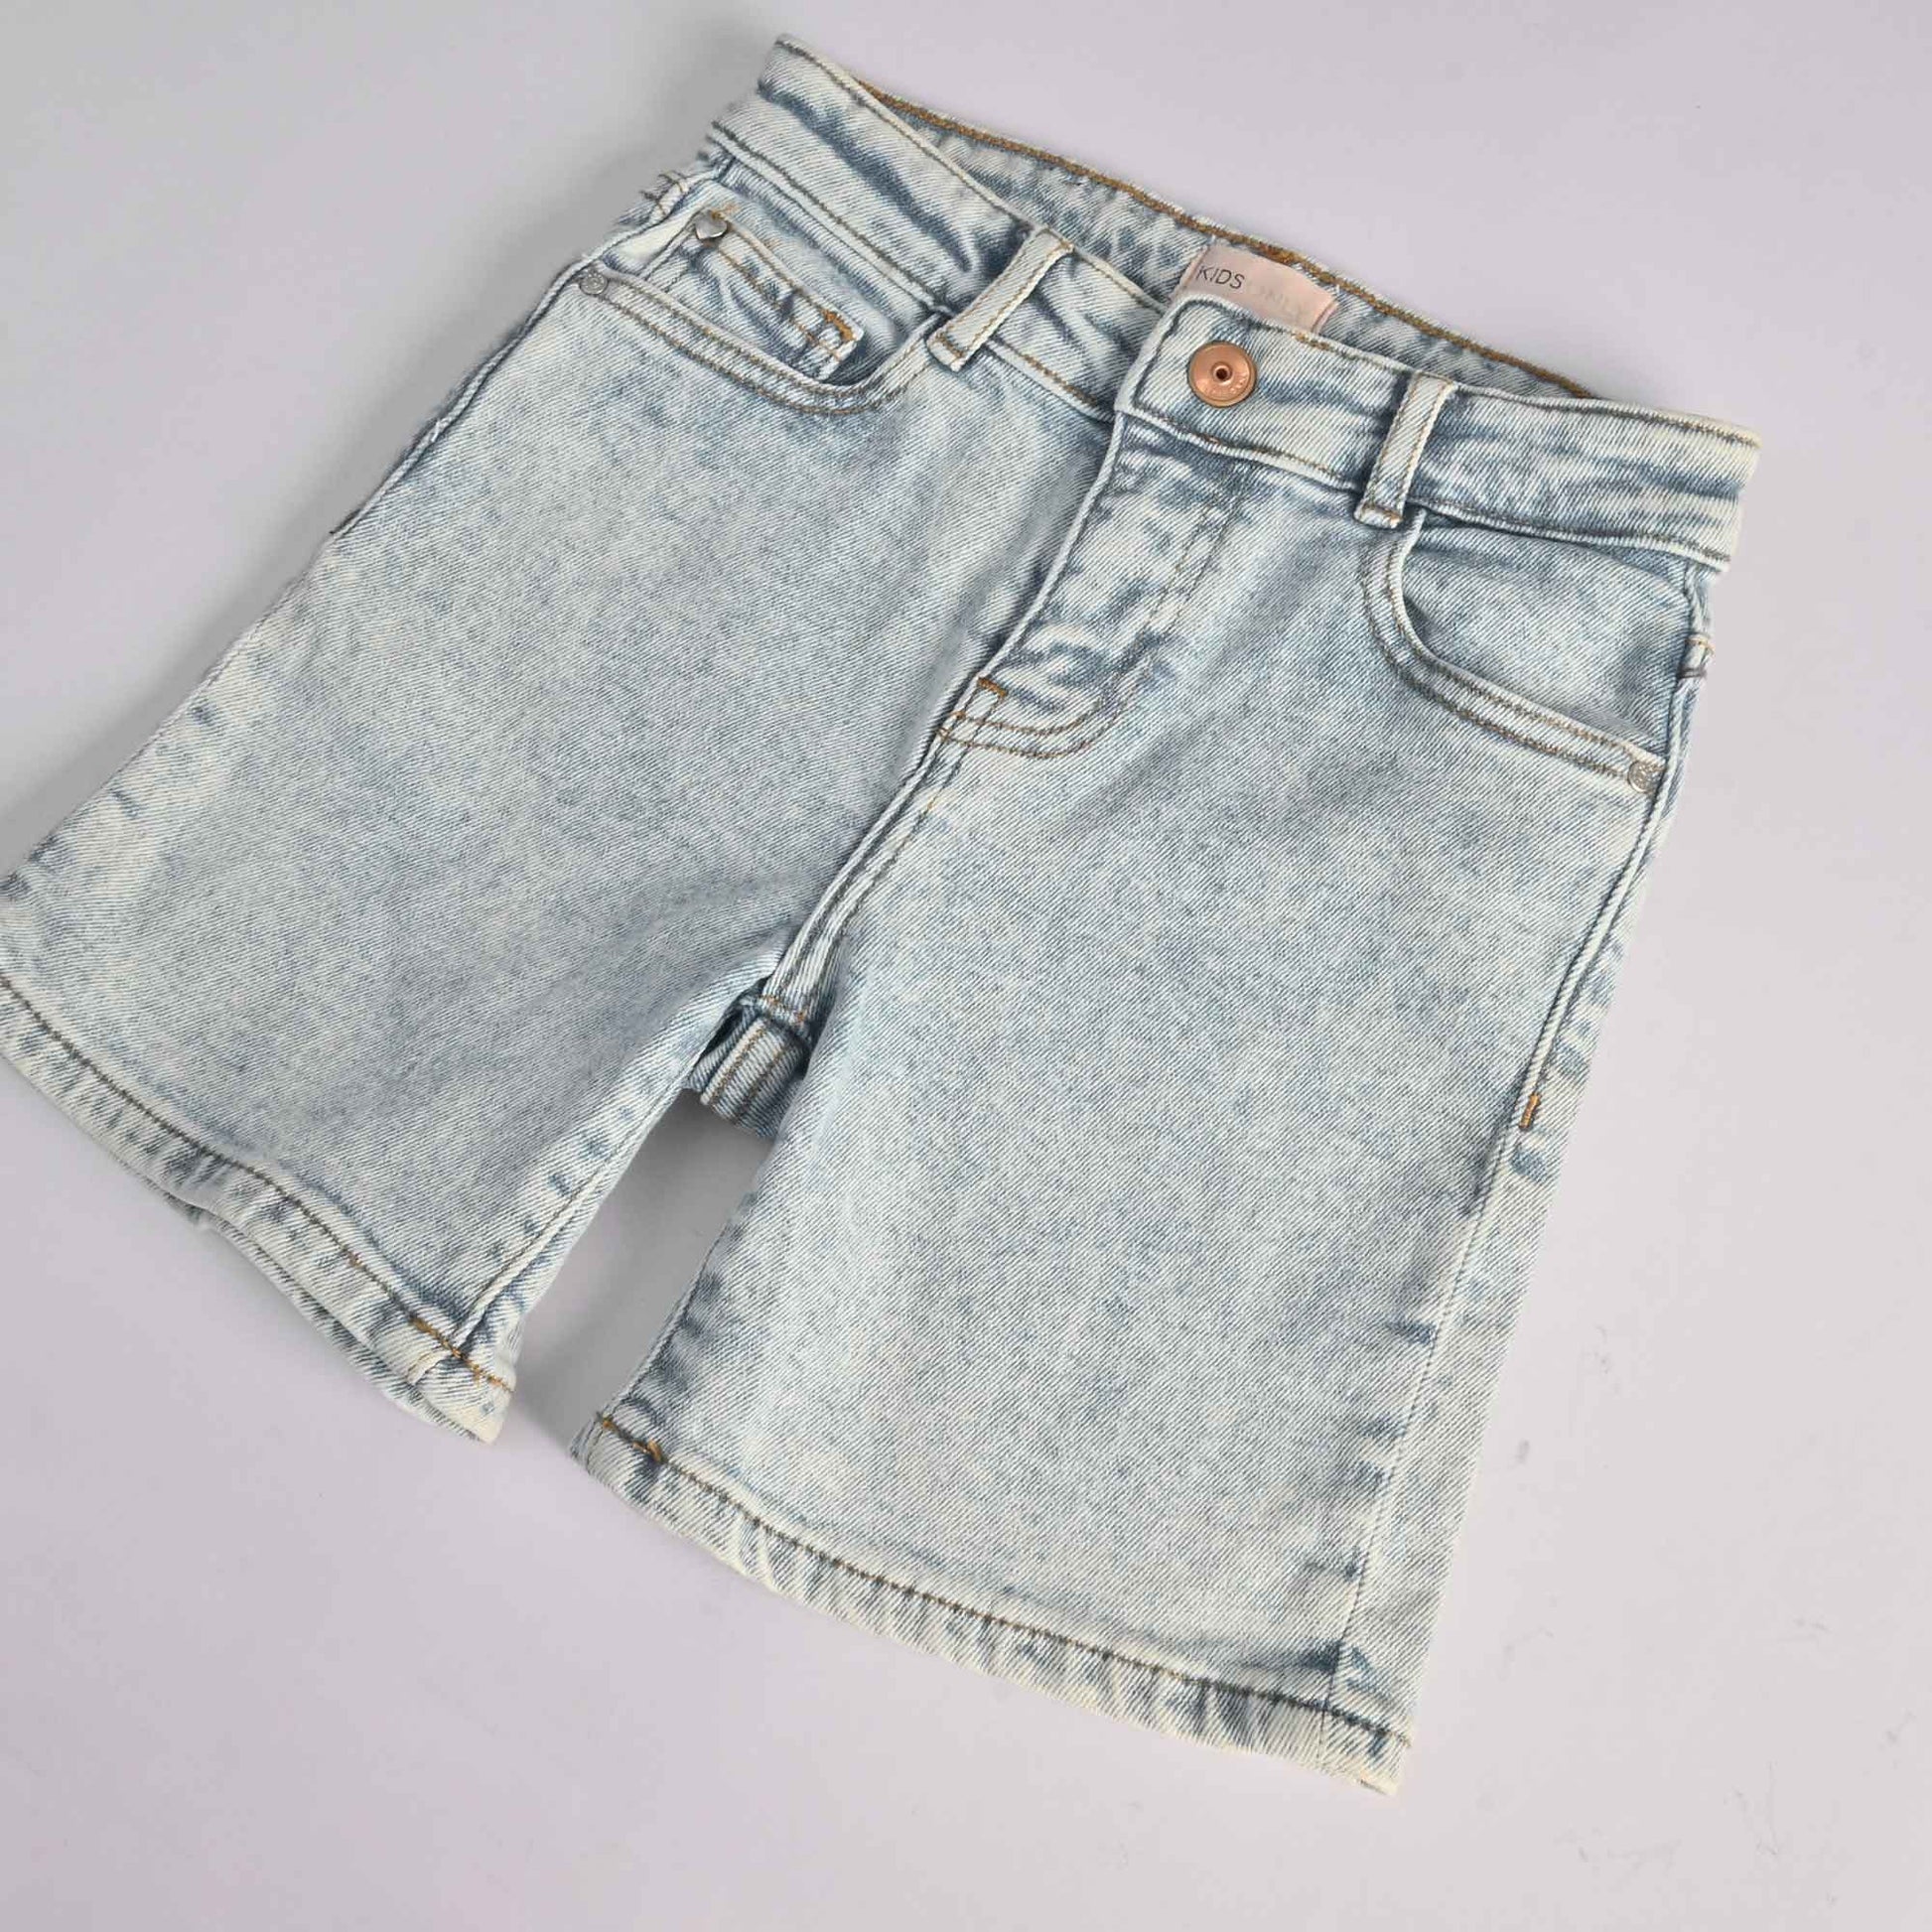 Only Kids's Washed Design Denim Shorts Kid's Shorts Minhas Garments 